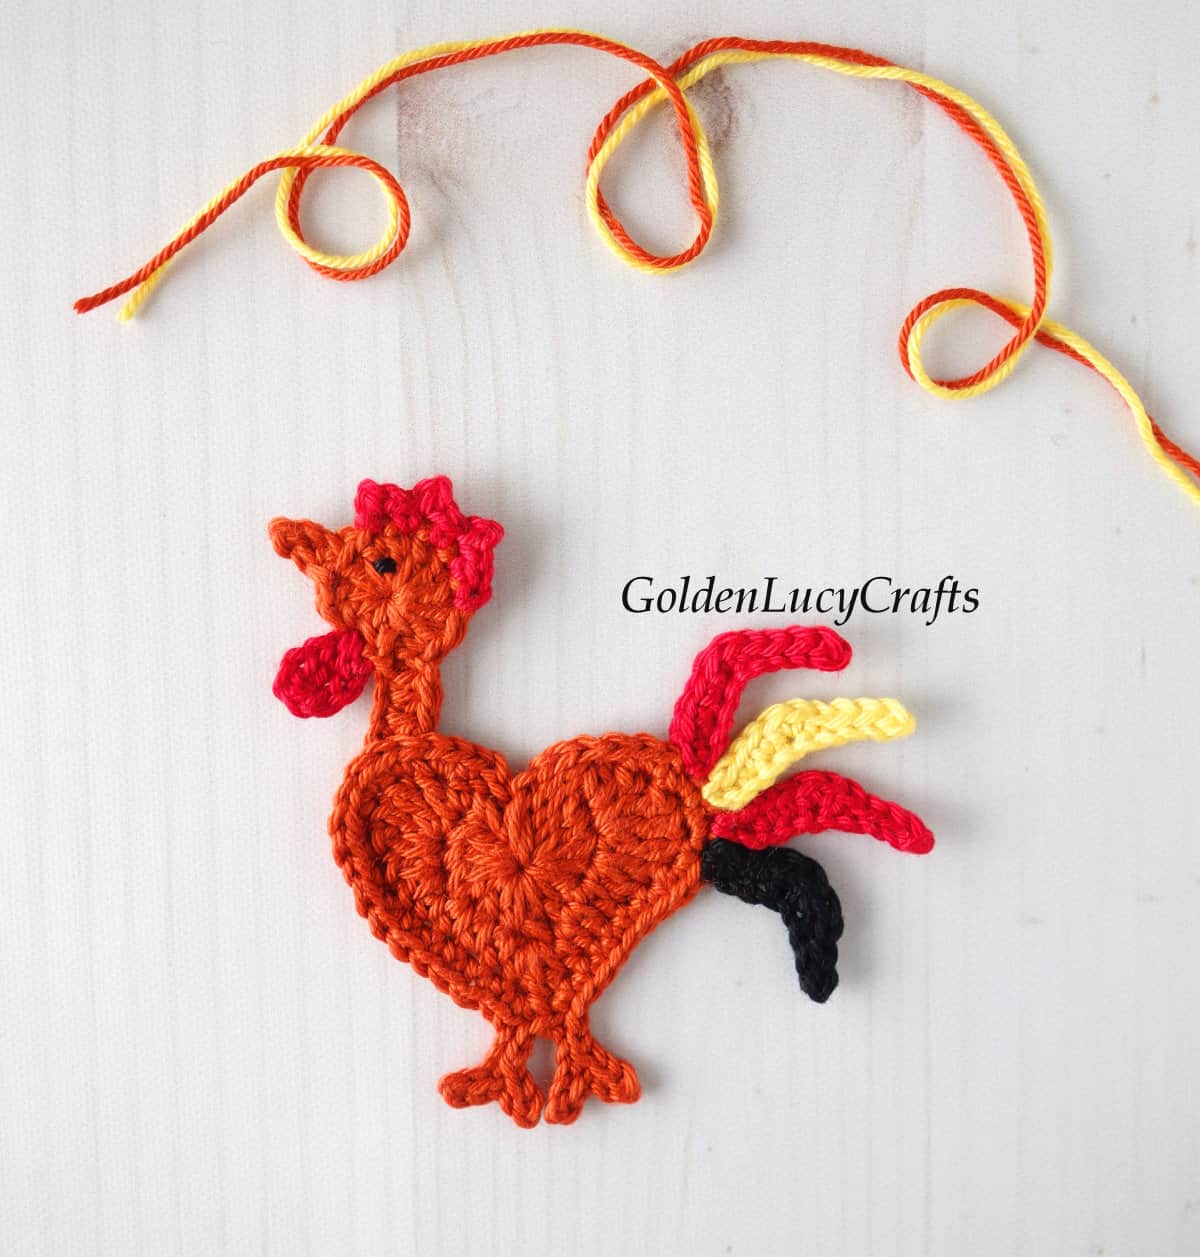 Crocheted rooster applique in dark orange color.